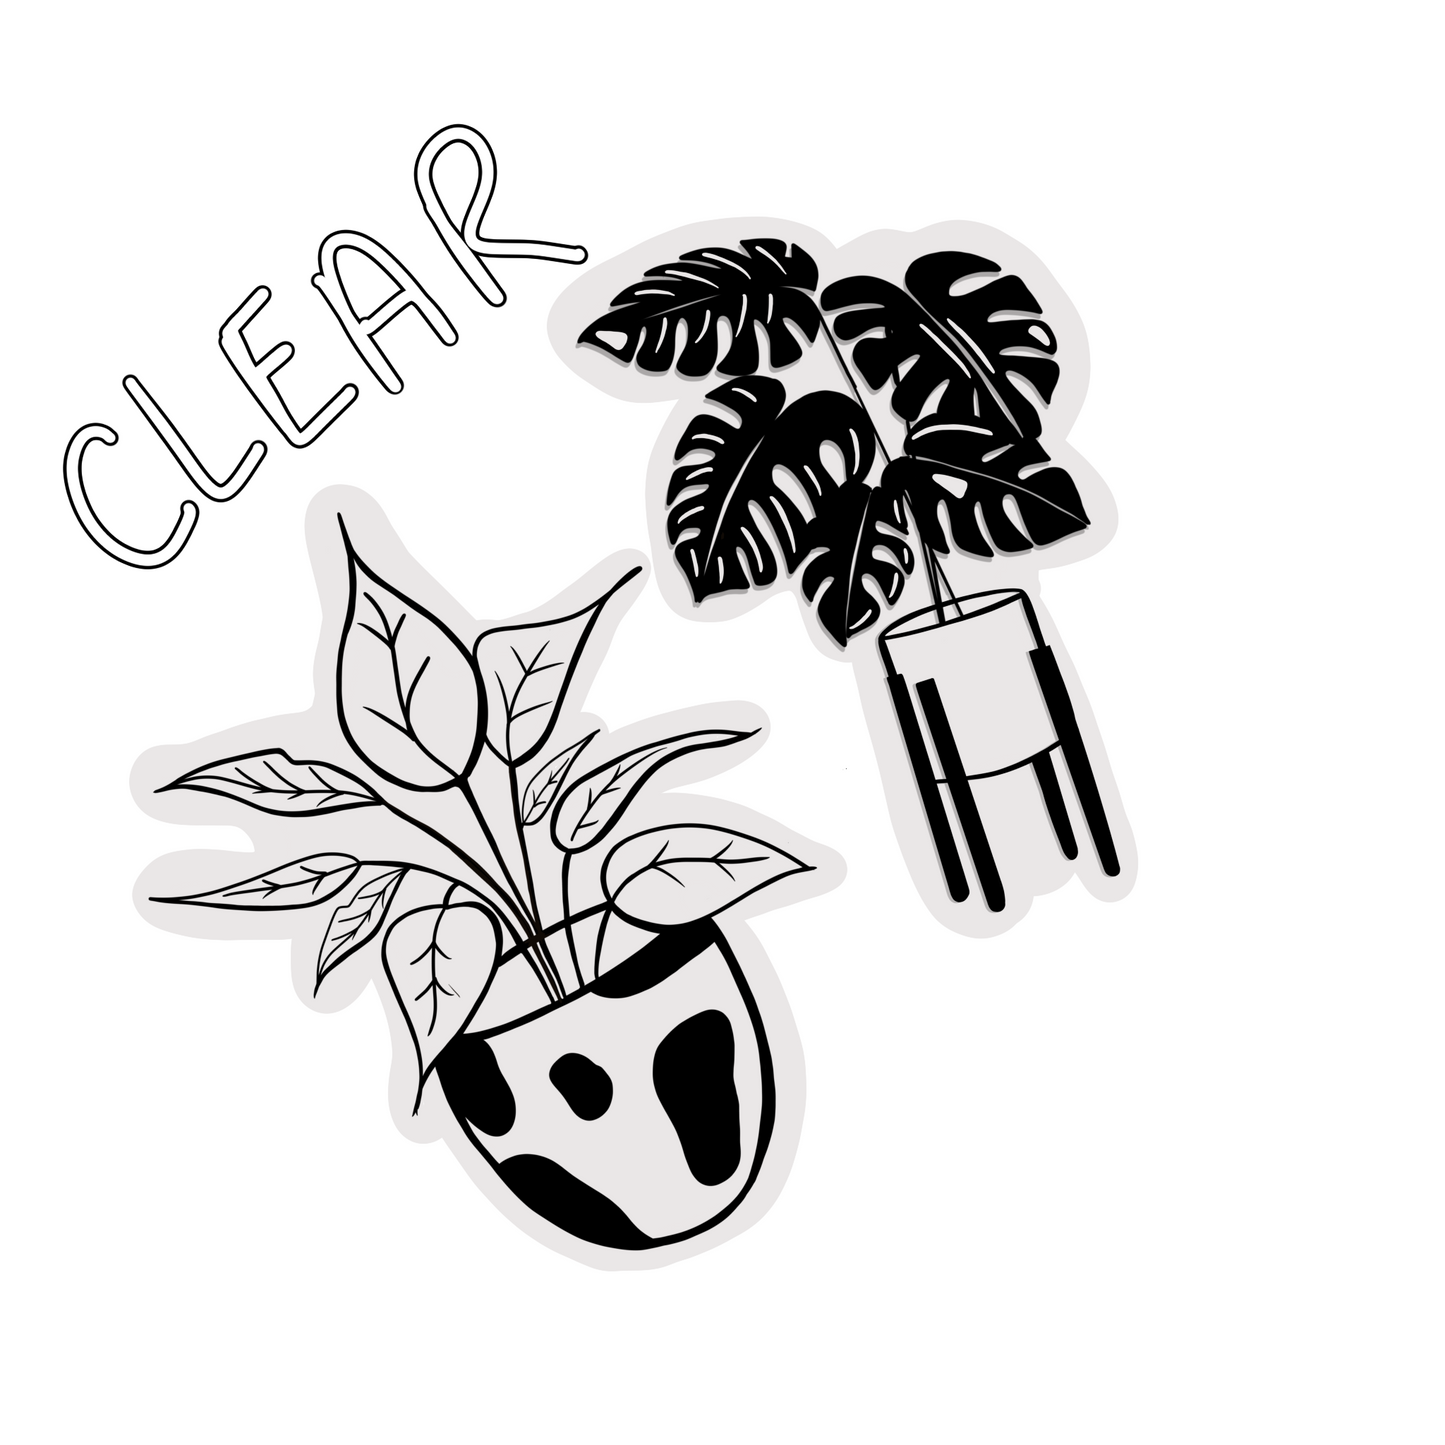 CLEAR Plant Waterproof Vinyl Stickers